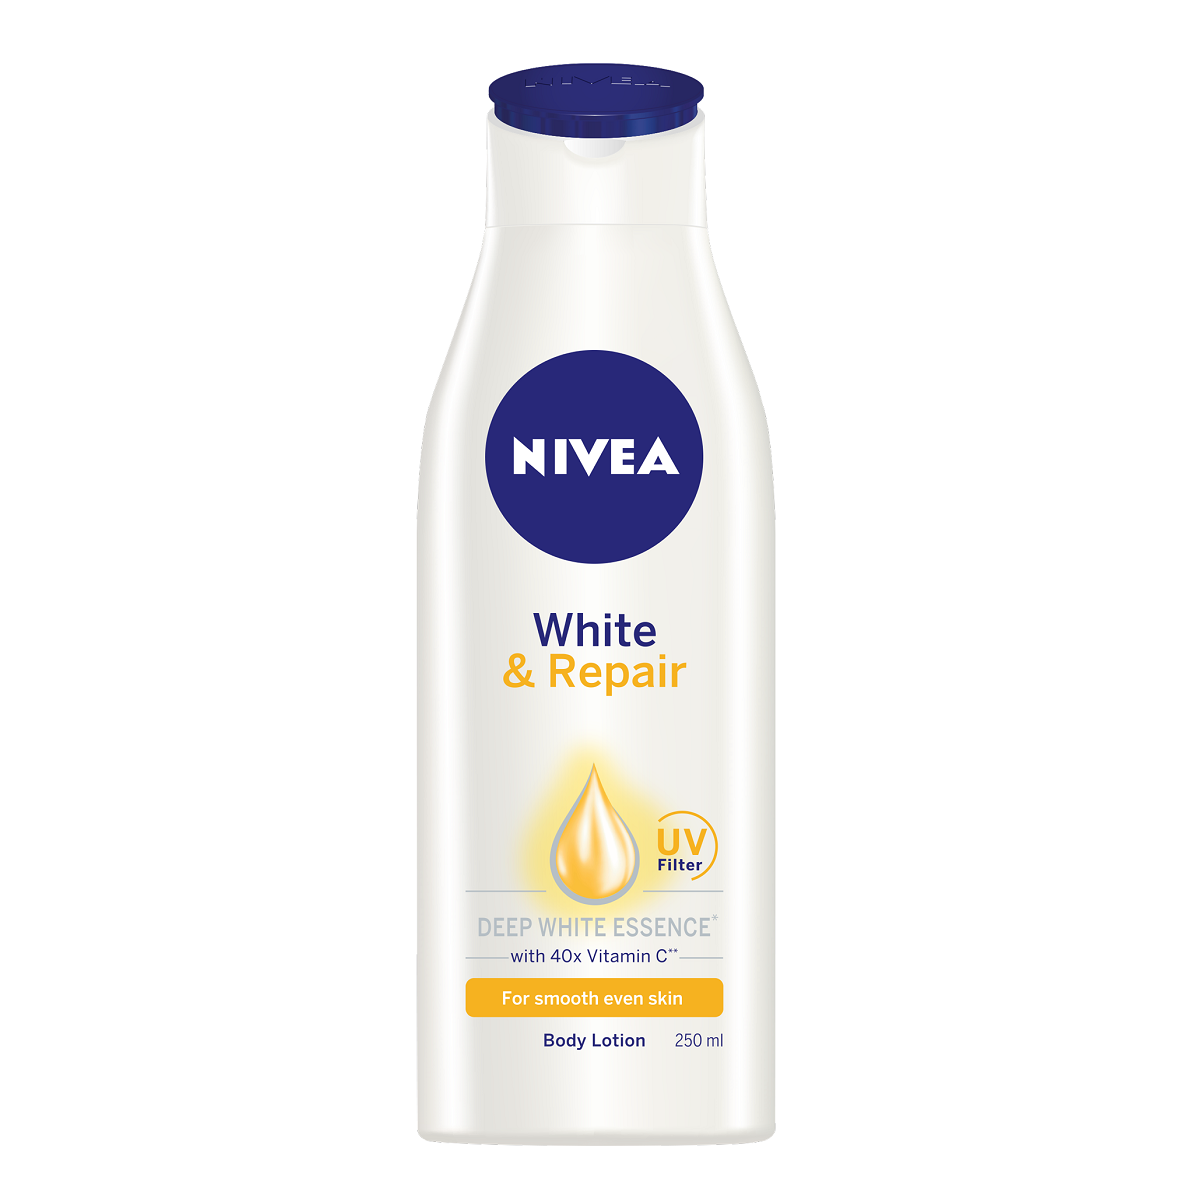 NIVEA BODY LOTION UV FILTER DEEP WHITE ESSENCE WHITE & REPAIR 250ML